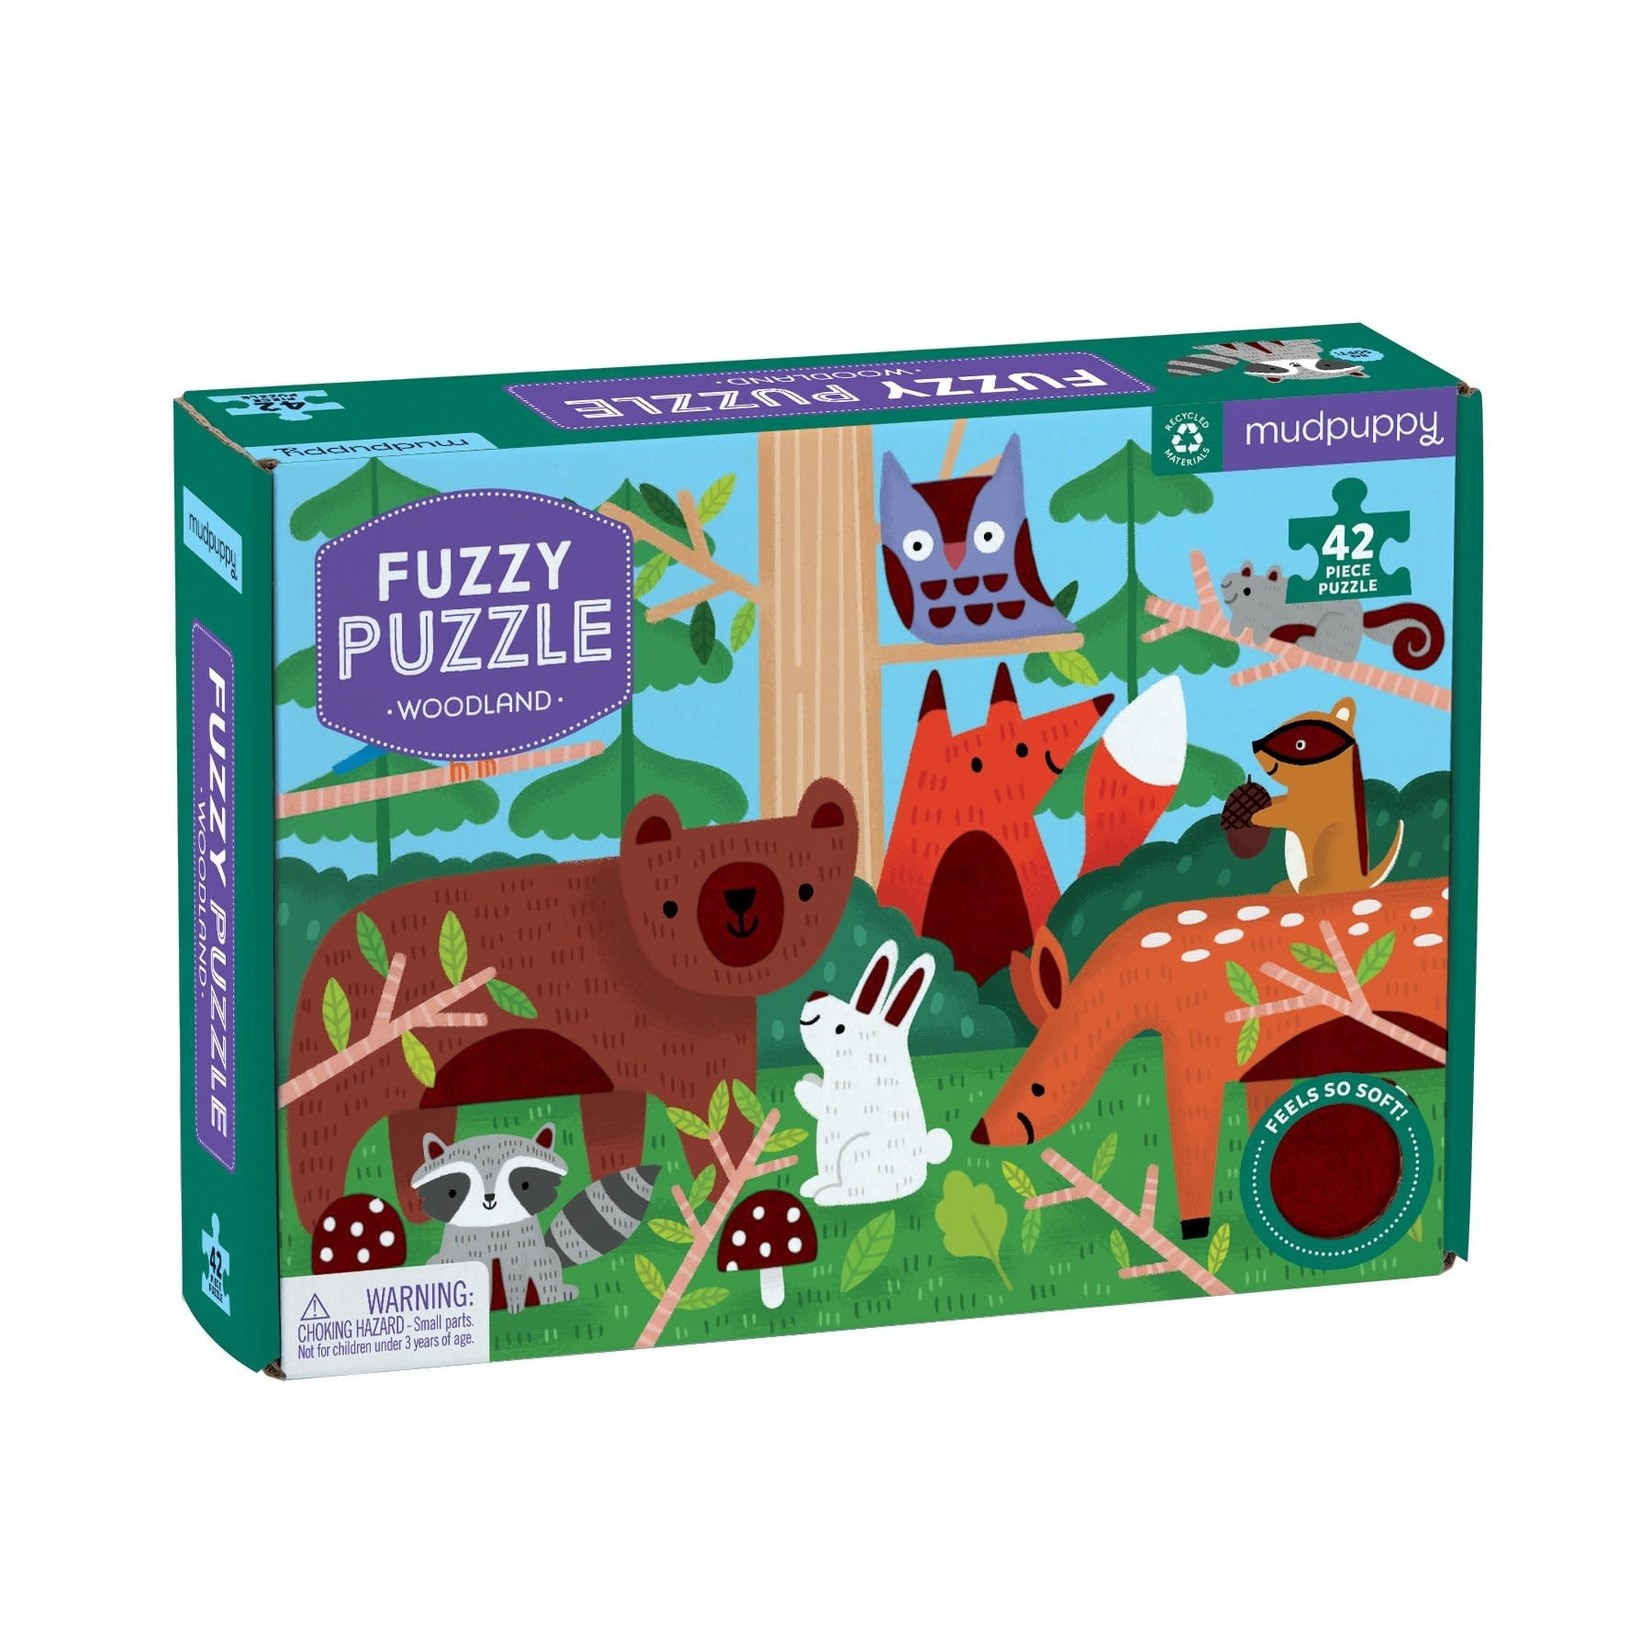 Mudpuppy Fuzzy Puzzle - Woodland 42 Piece Puzzle